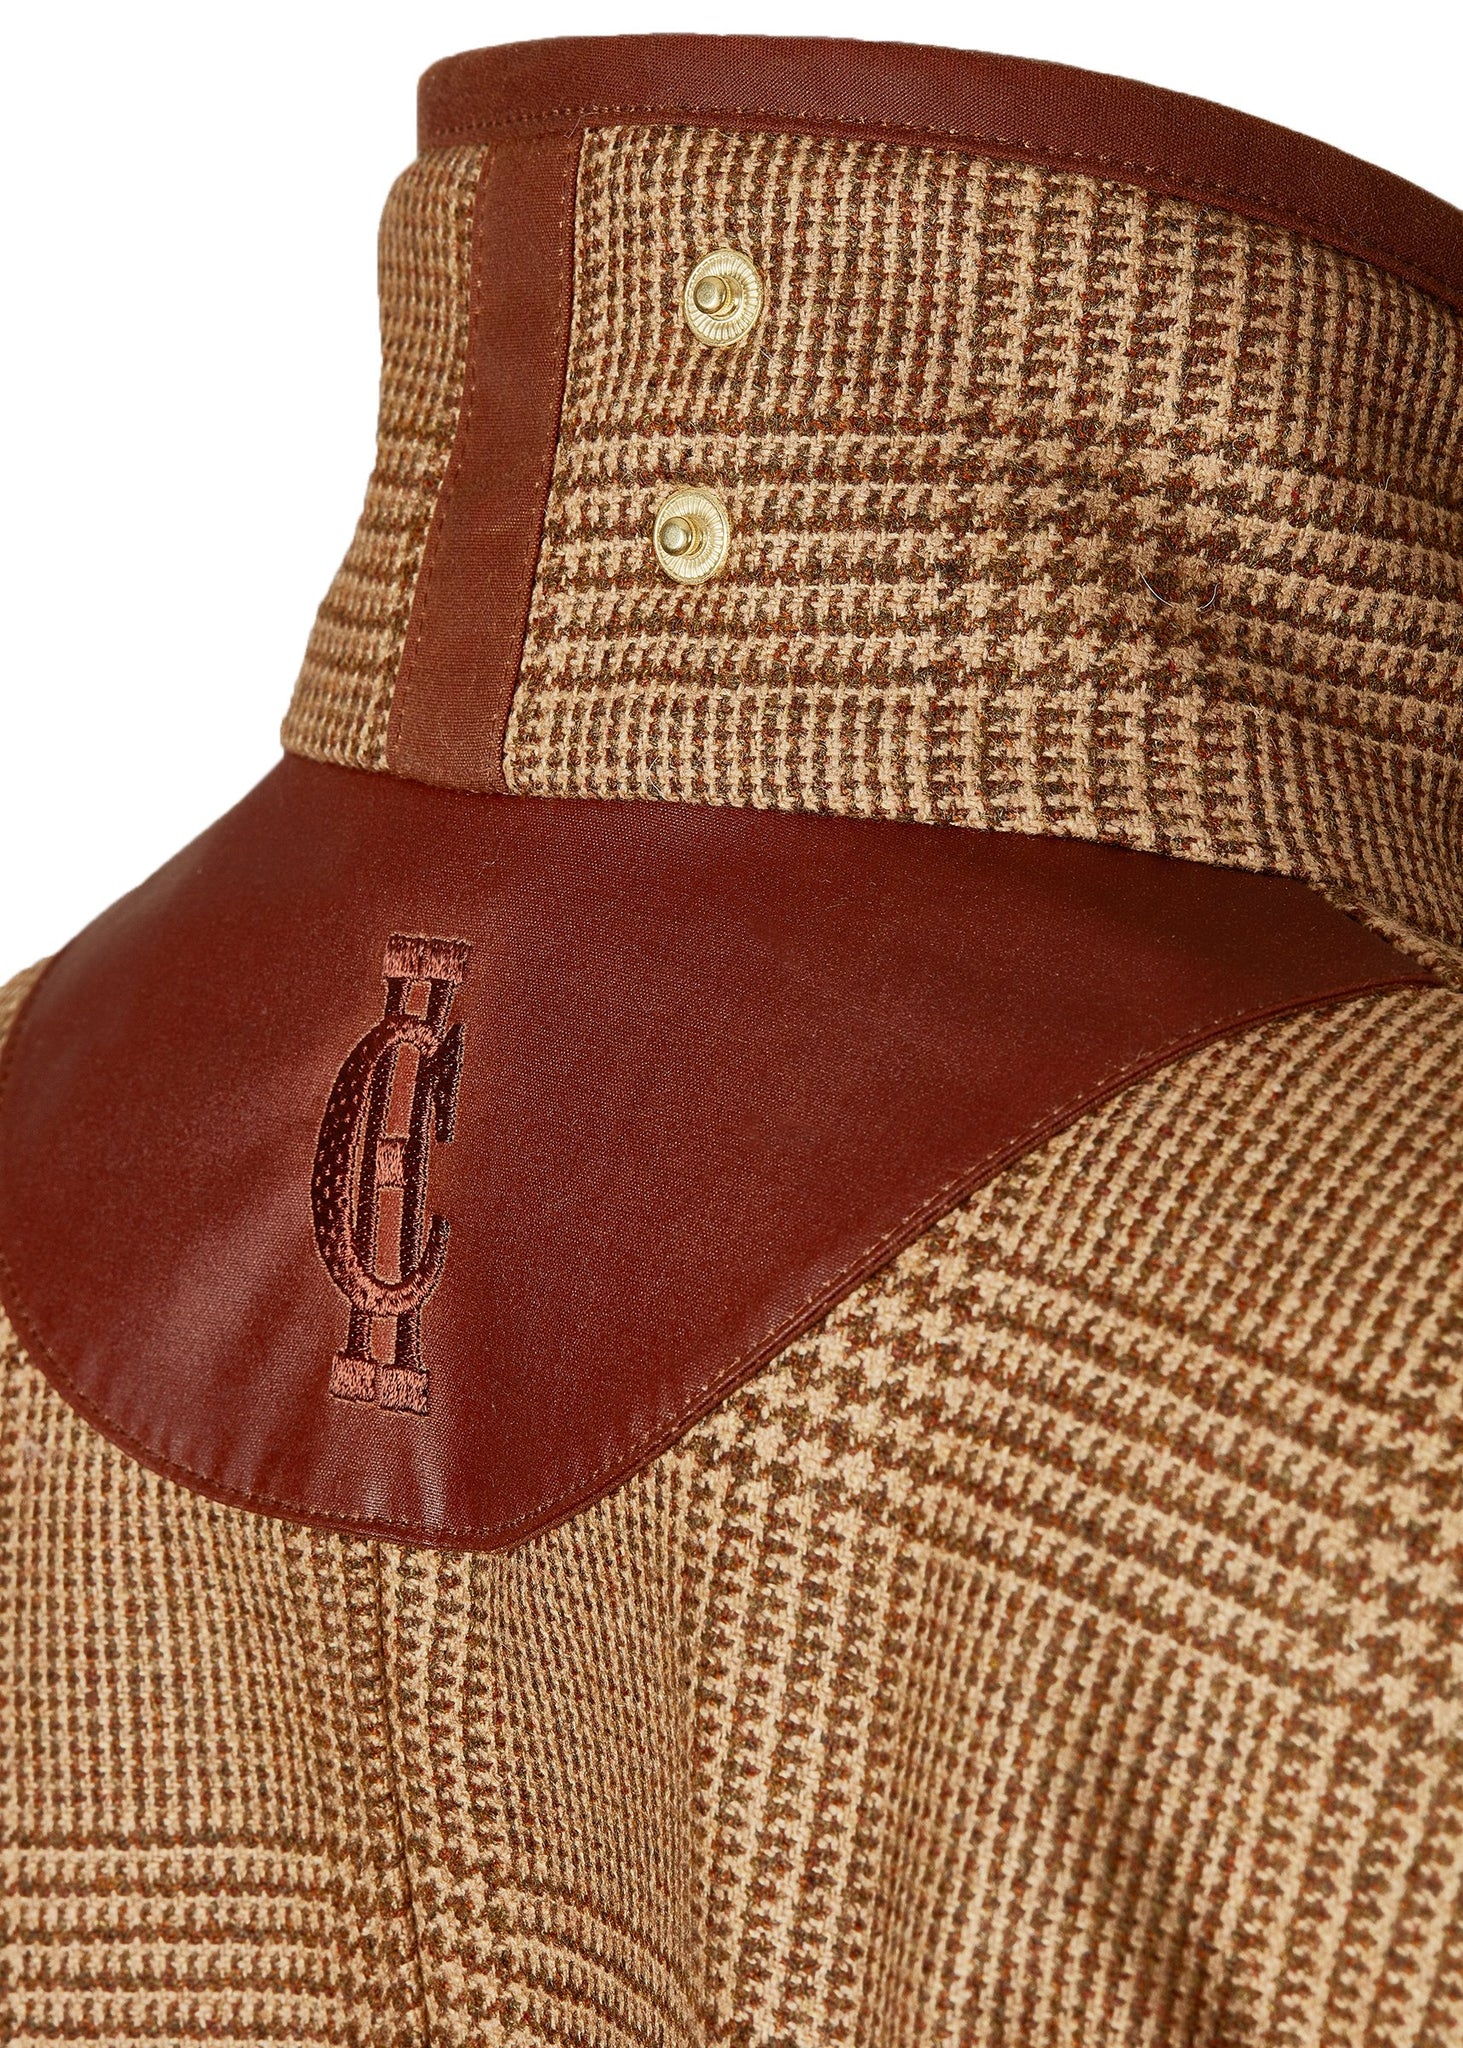 Back collar shot of tan brown tartan tweed field coat